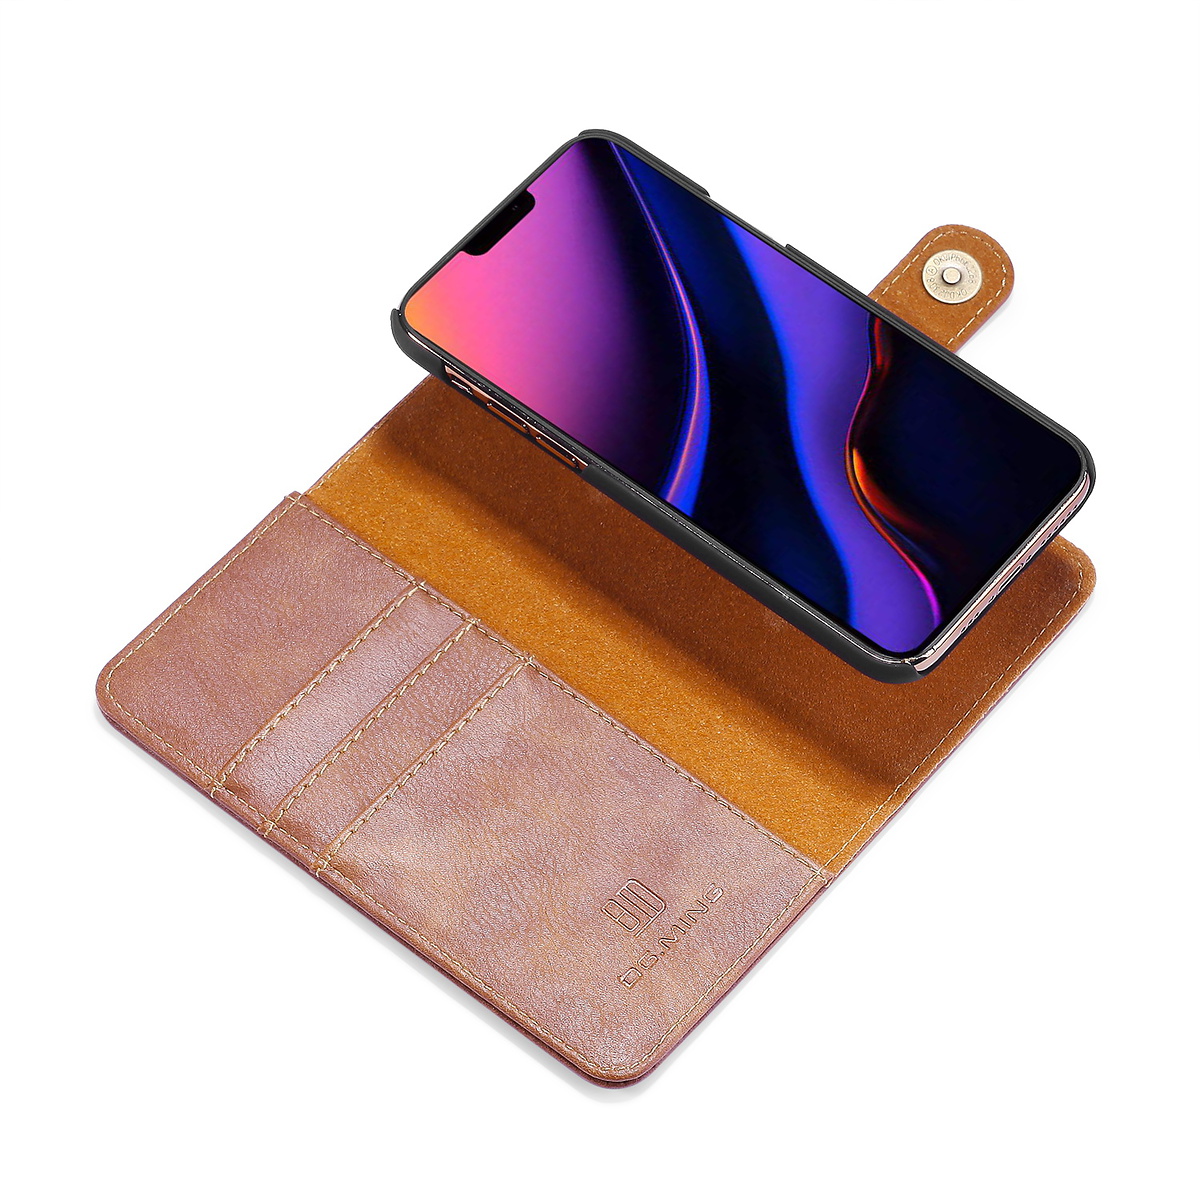 DG.MING fodral med magnetskal & ställ, iPhone 11 Pro, brun